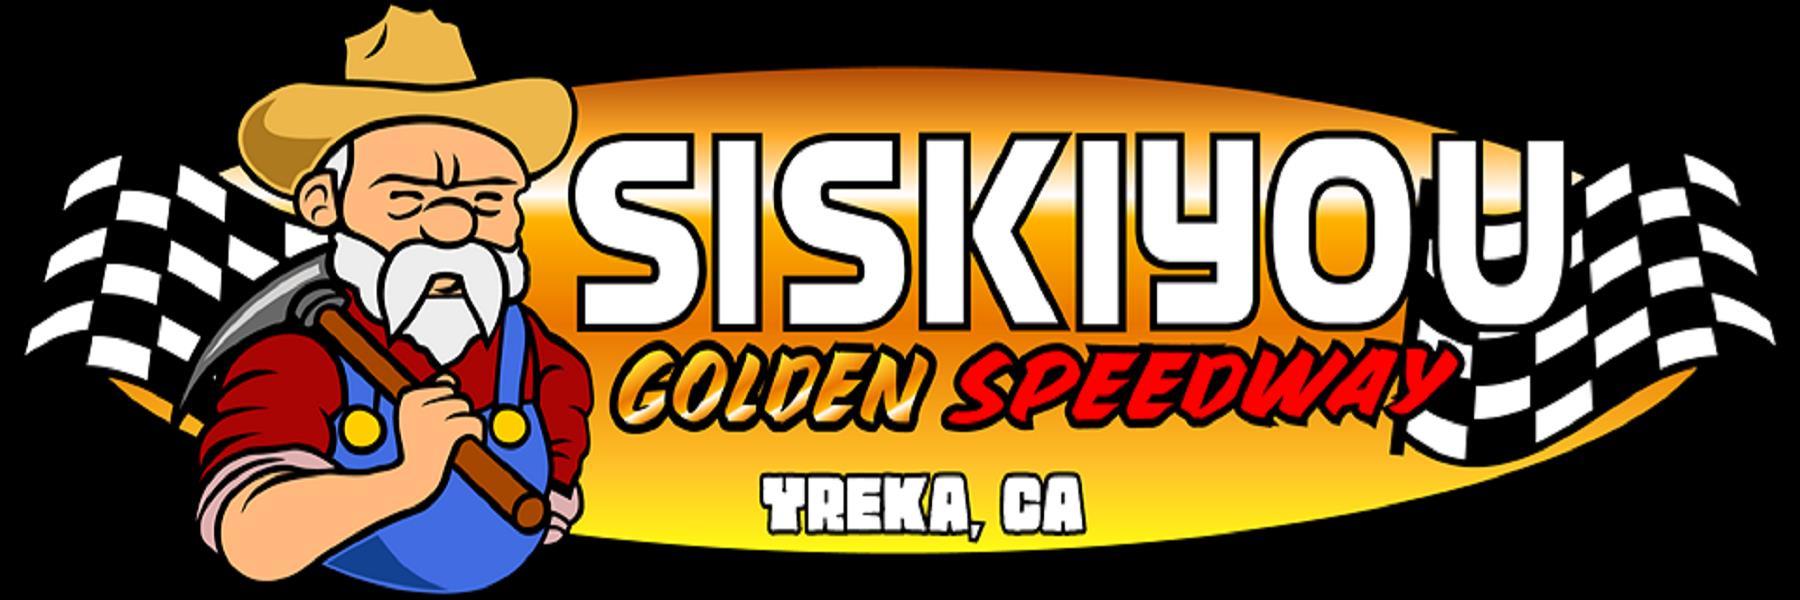 7/16/2022 - Siskiyou Golden Speedway